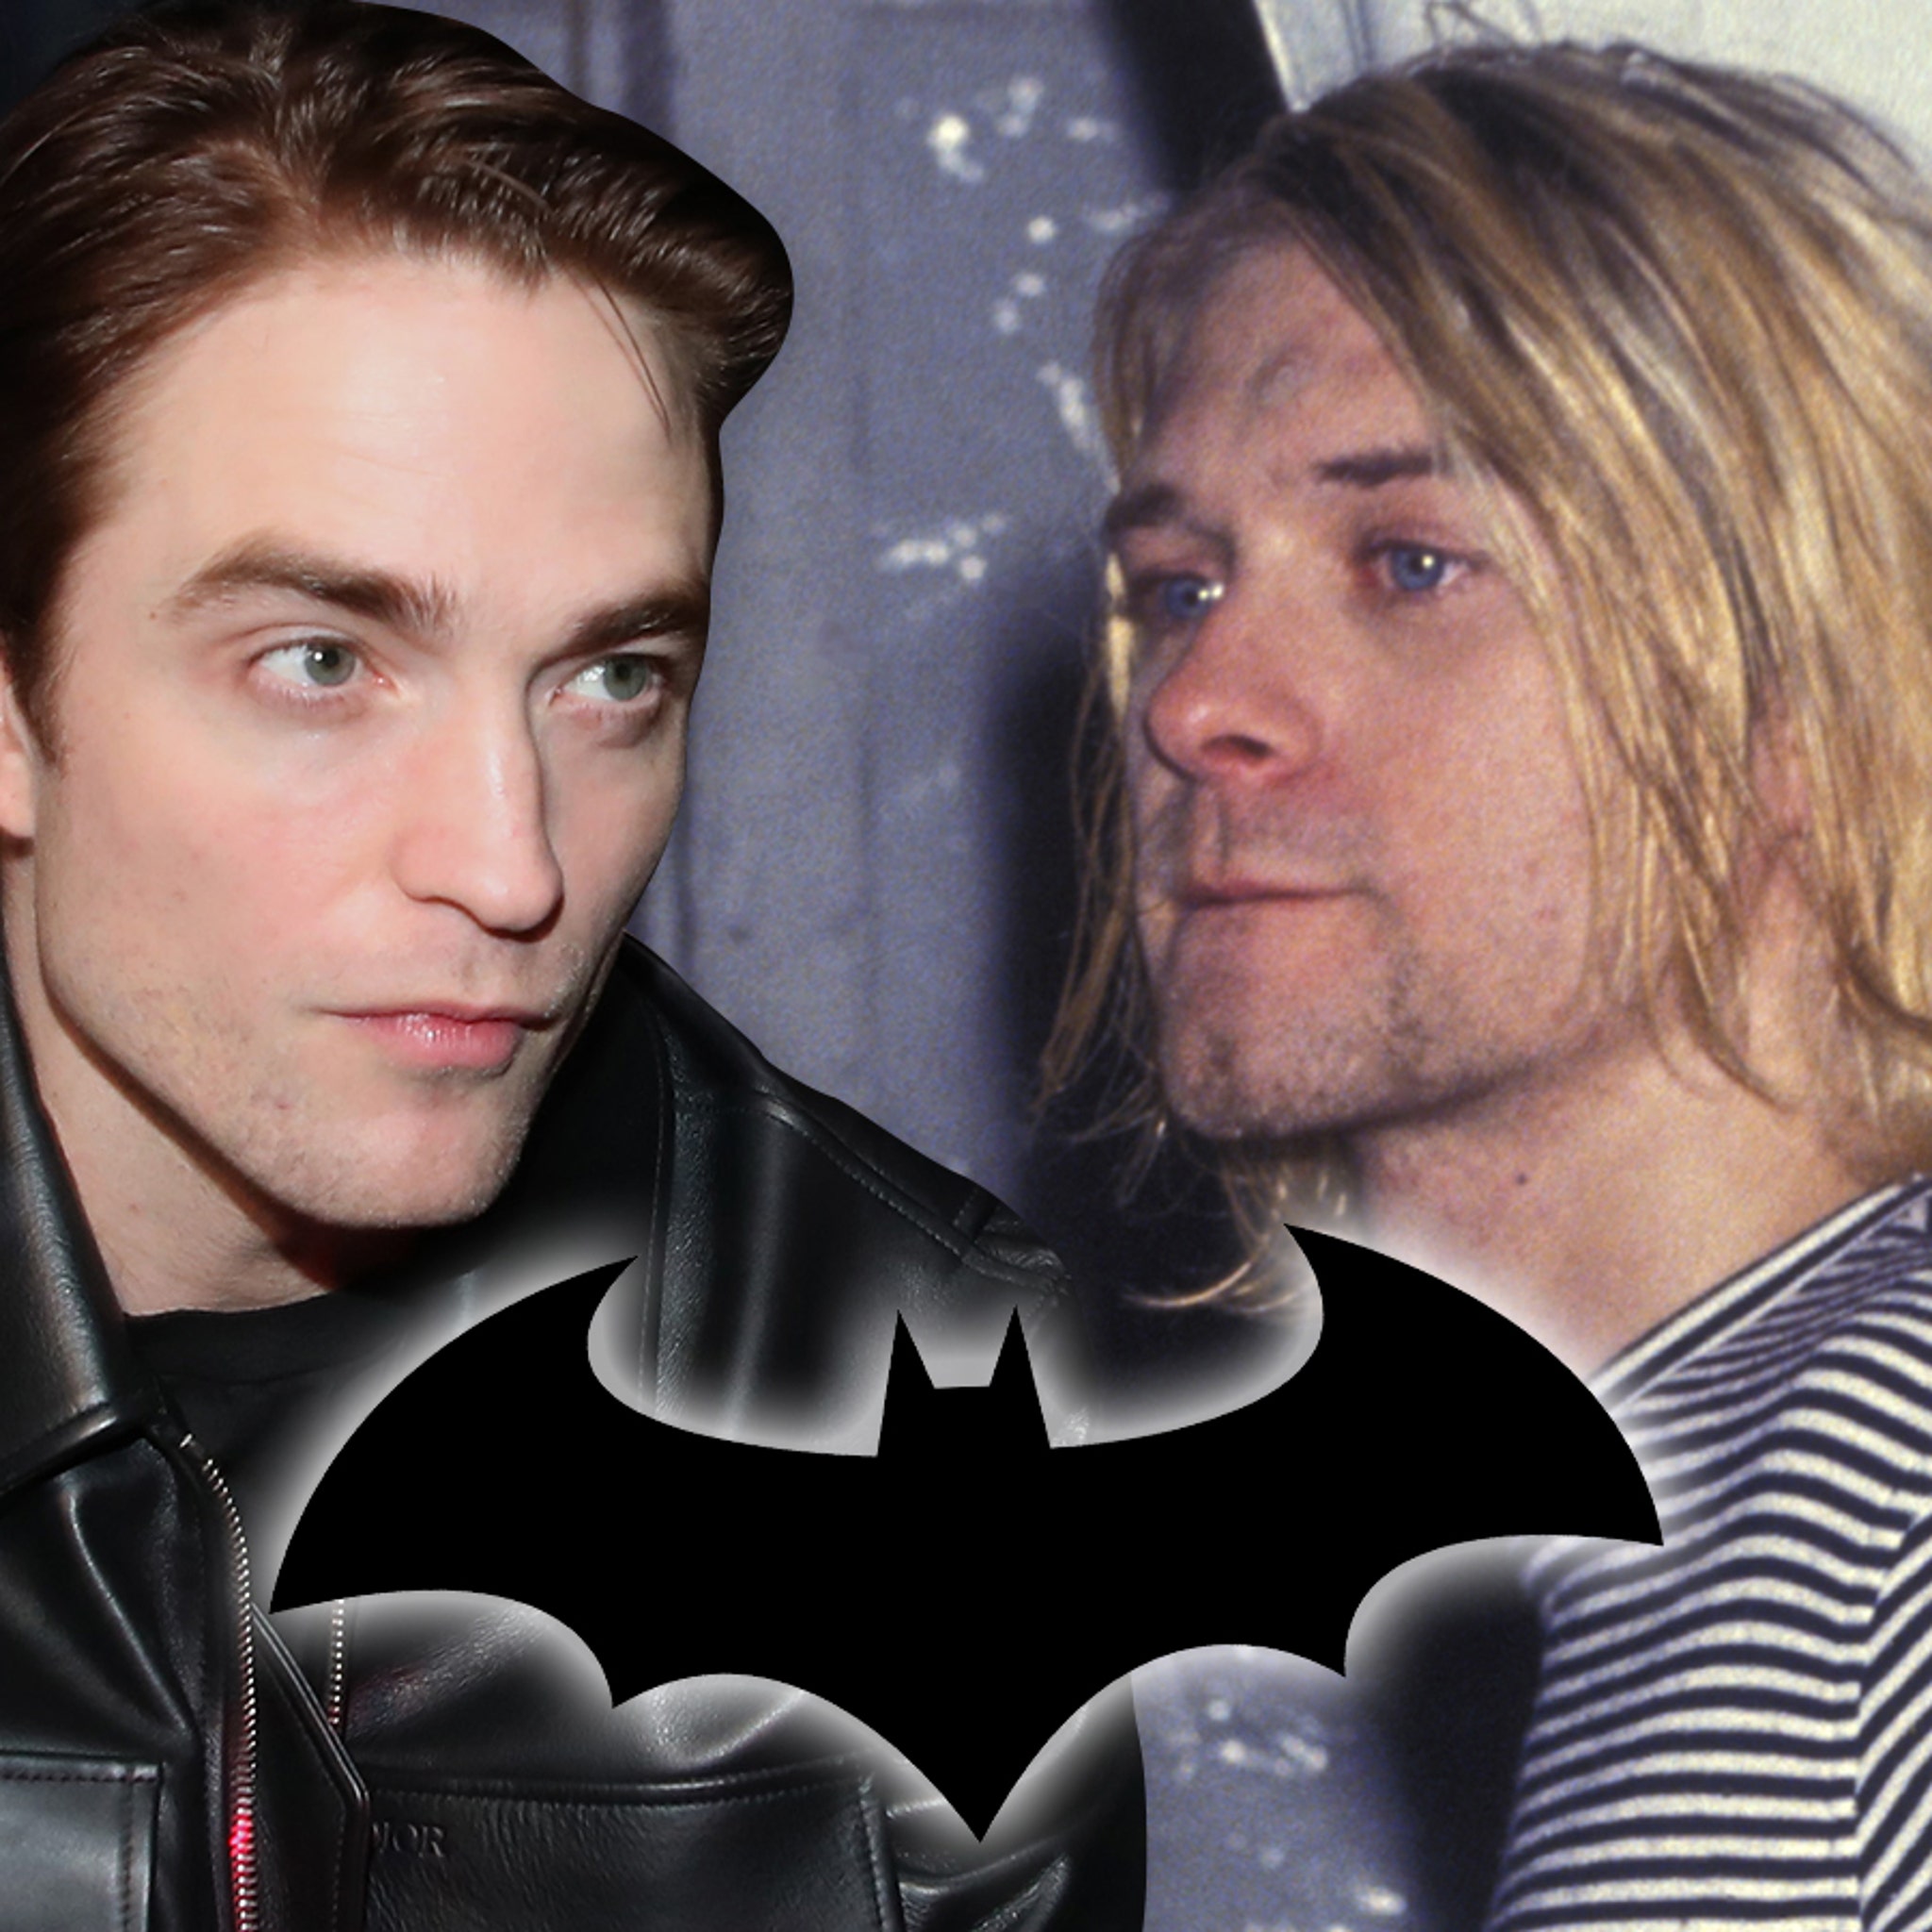 Robert Pattinson's Bruce Wayne Inspired by Kurt Cobain, Director Says